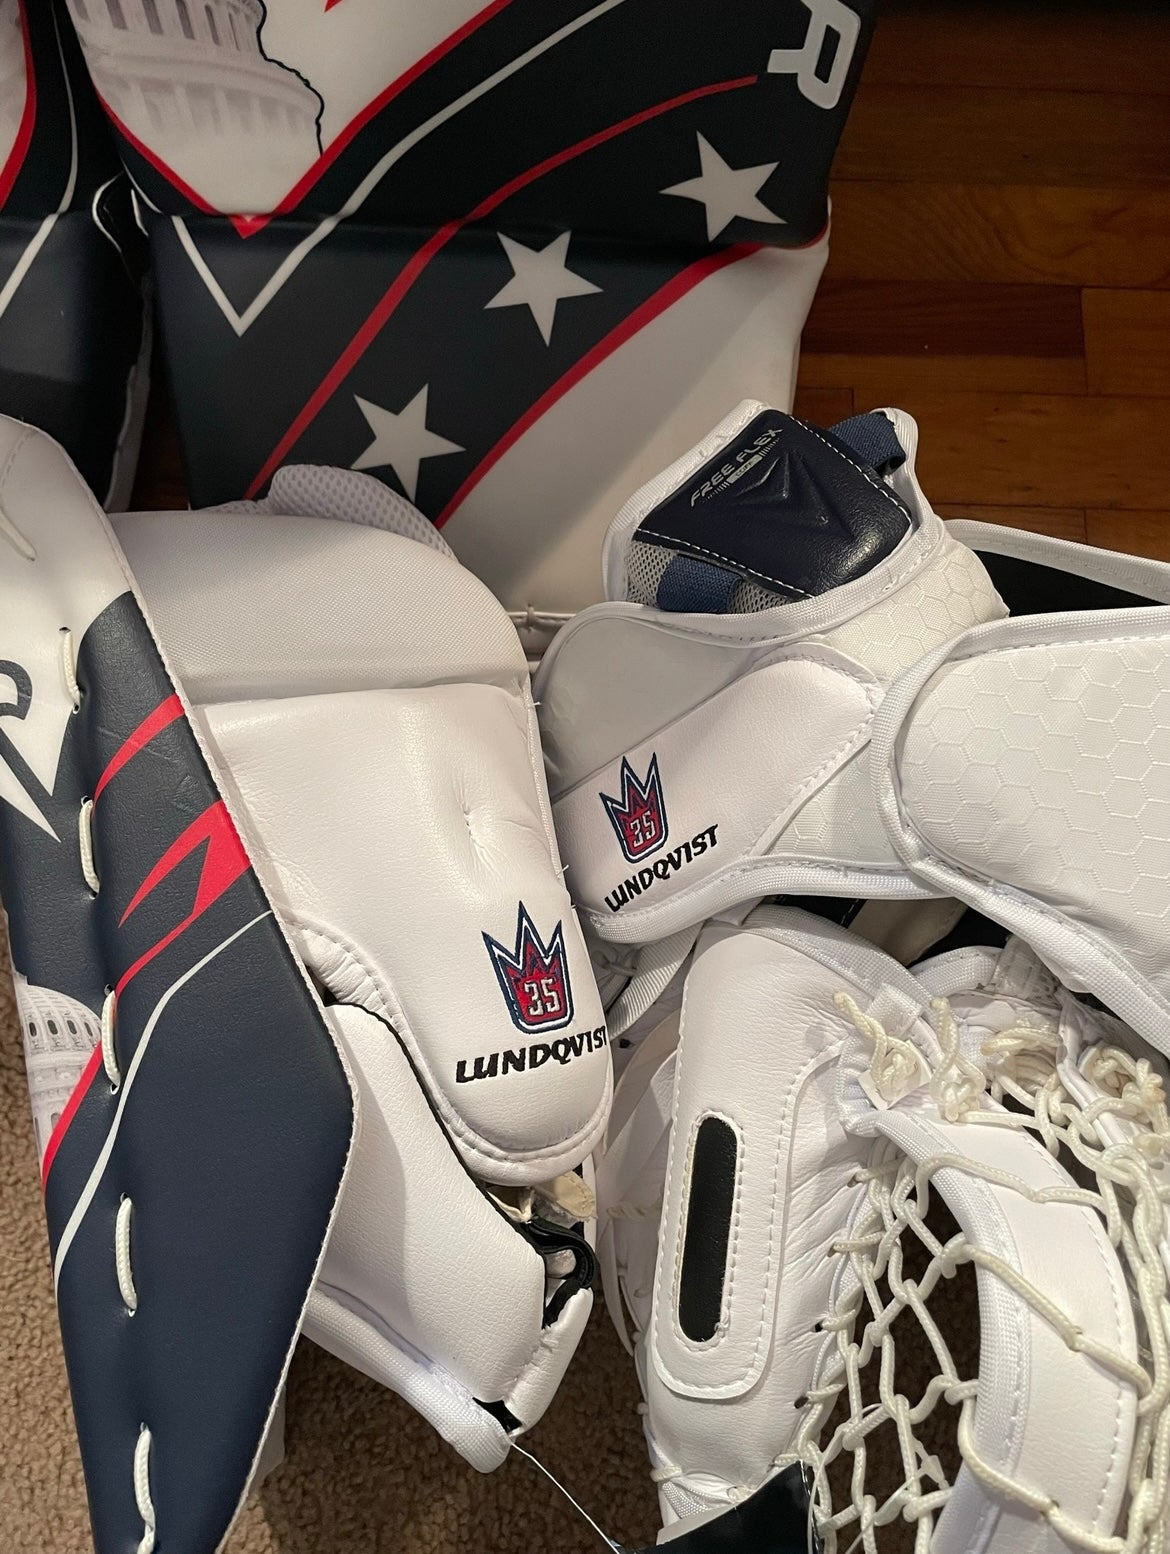 Henrik Lundqvist shows off his new Washington Capitals themed goalie pads.  - HockeyFeed